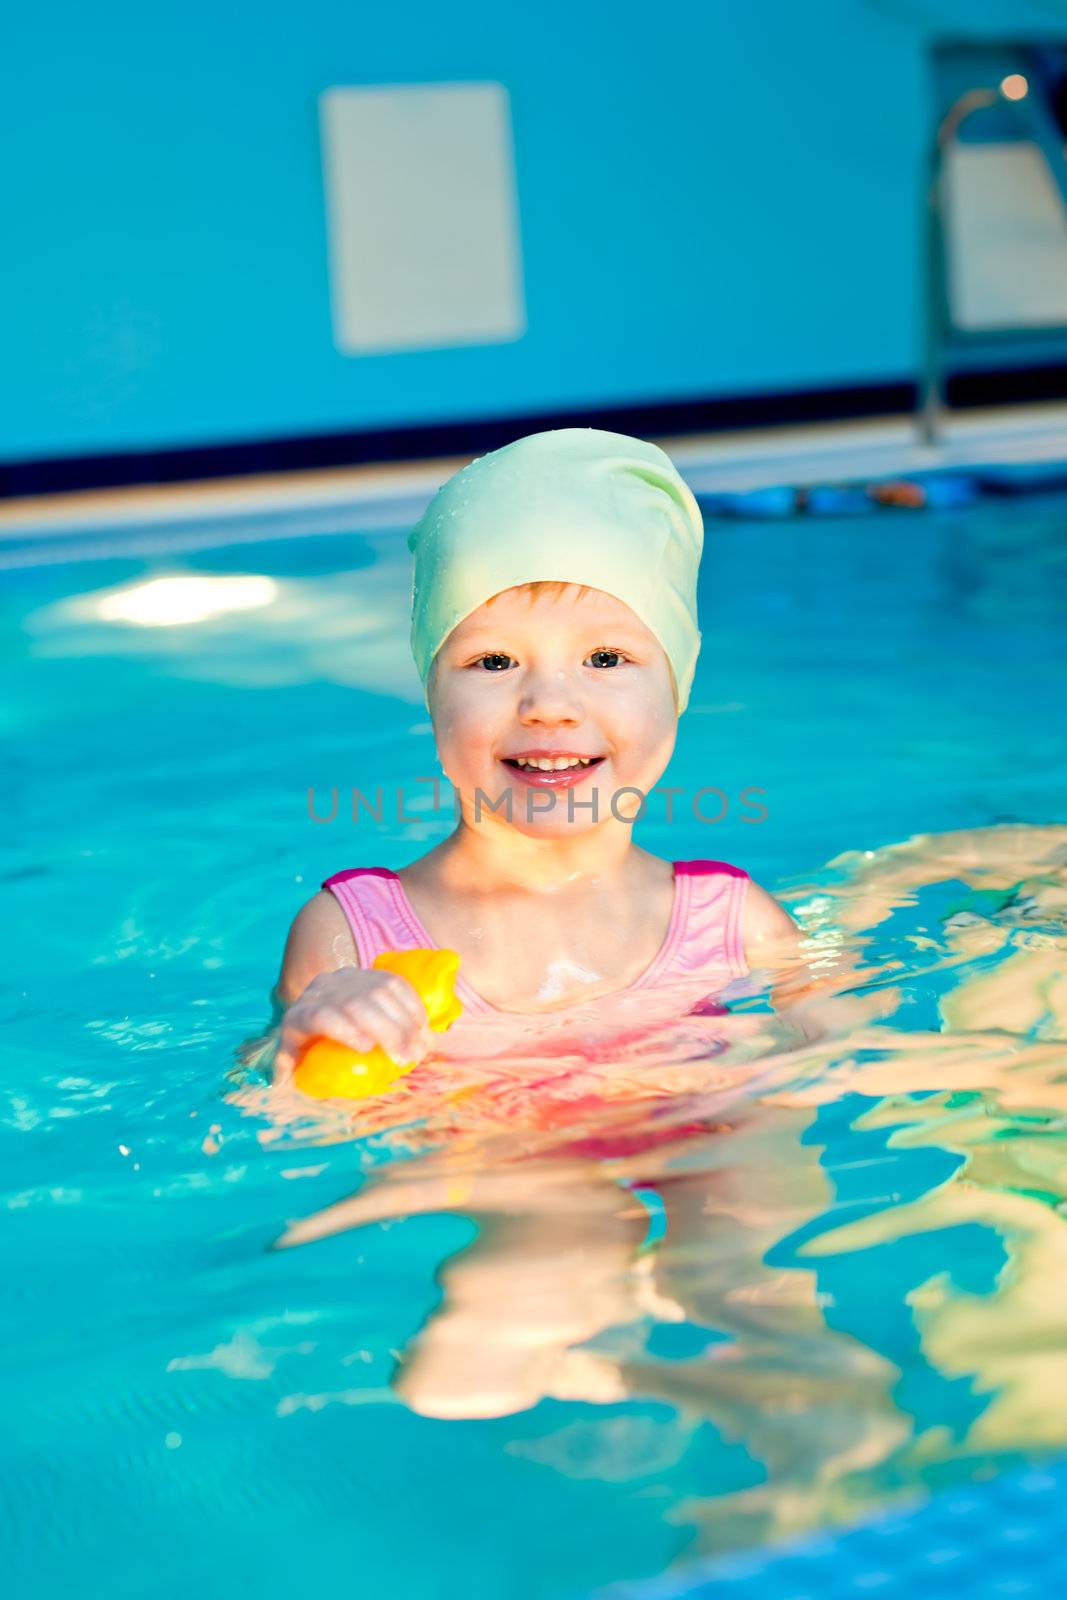 Cute little girl swimming in a pool